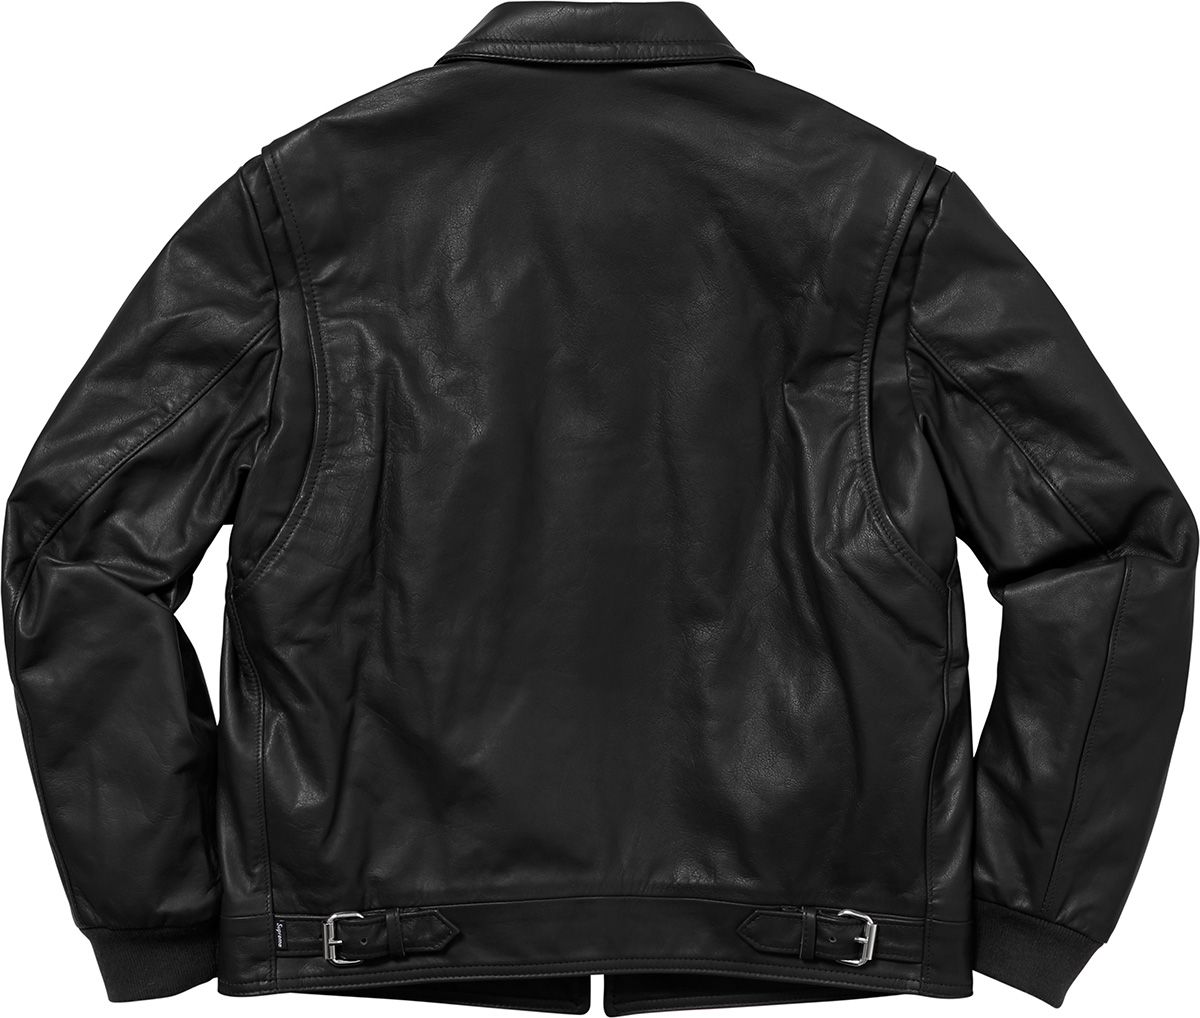 Supreme®/Schott® Leopard Lined Leather Work Jacket - Fall/Winter